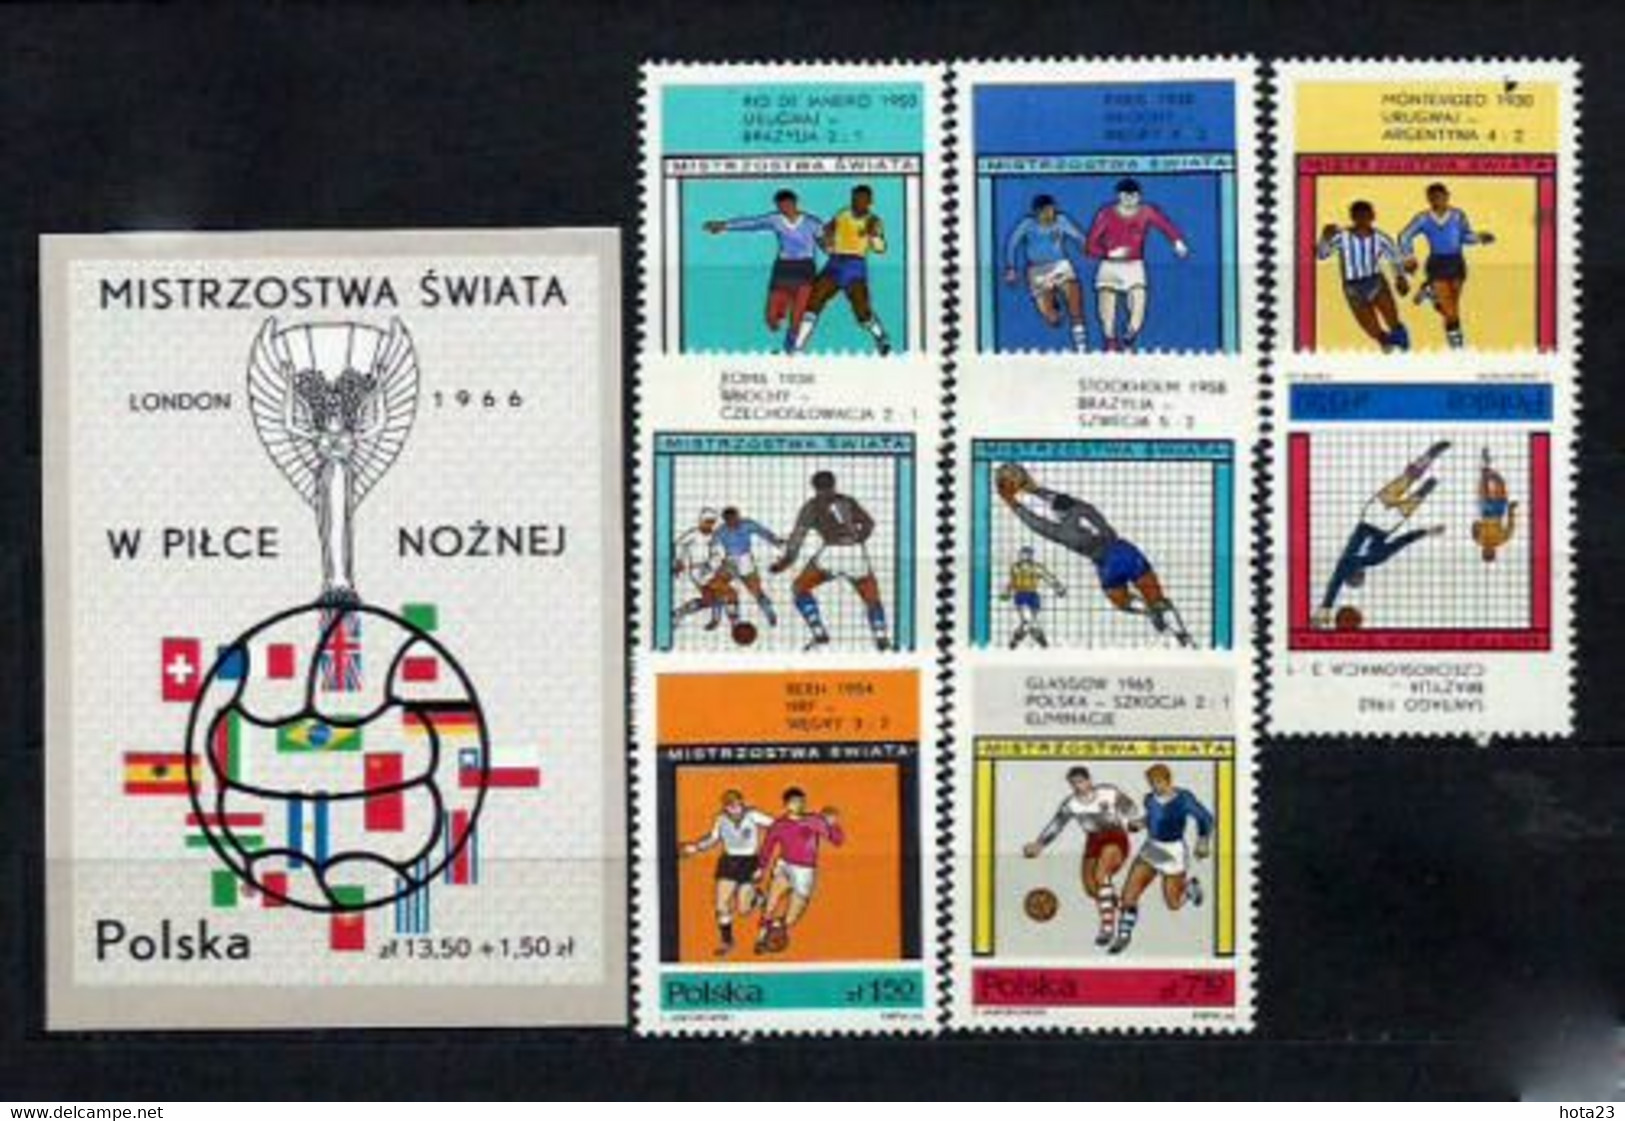 Poland 1966 World Cup Soccer/Football ENGLAND S/s +stamp Set MNH - 1966 – England